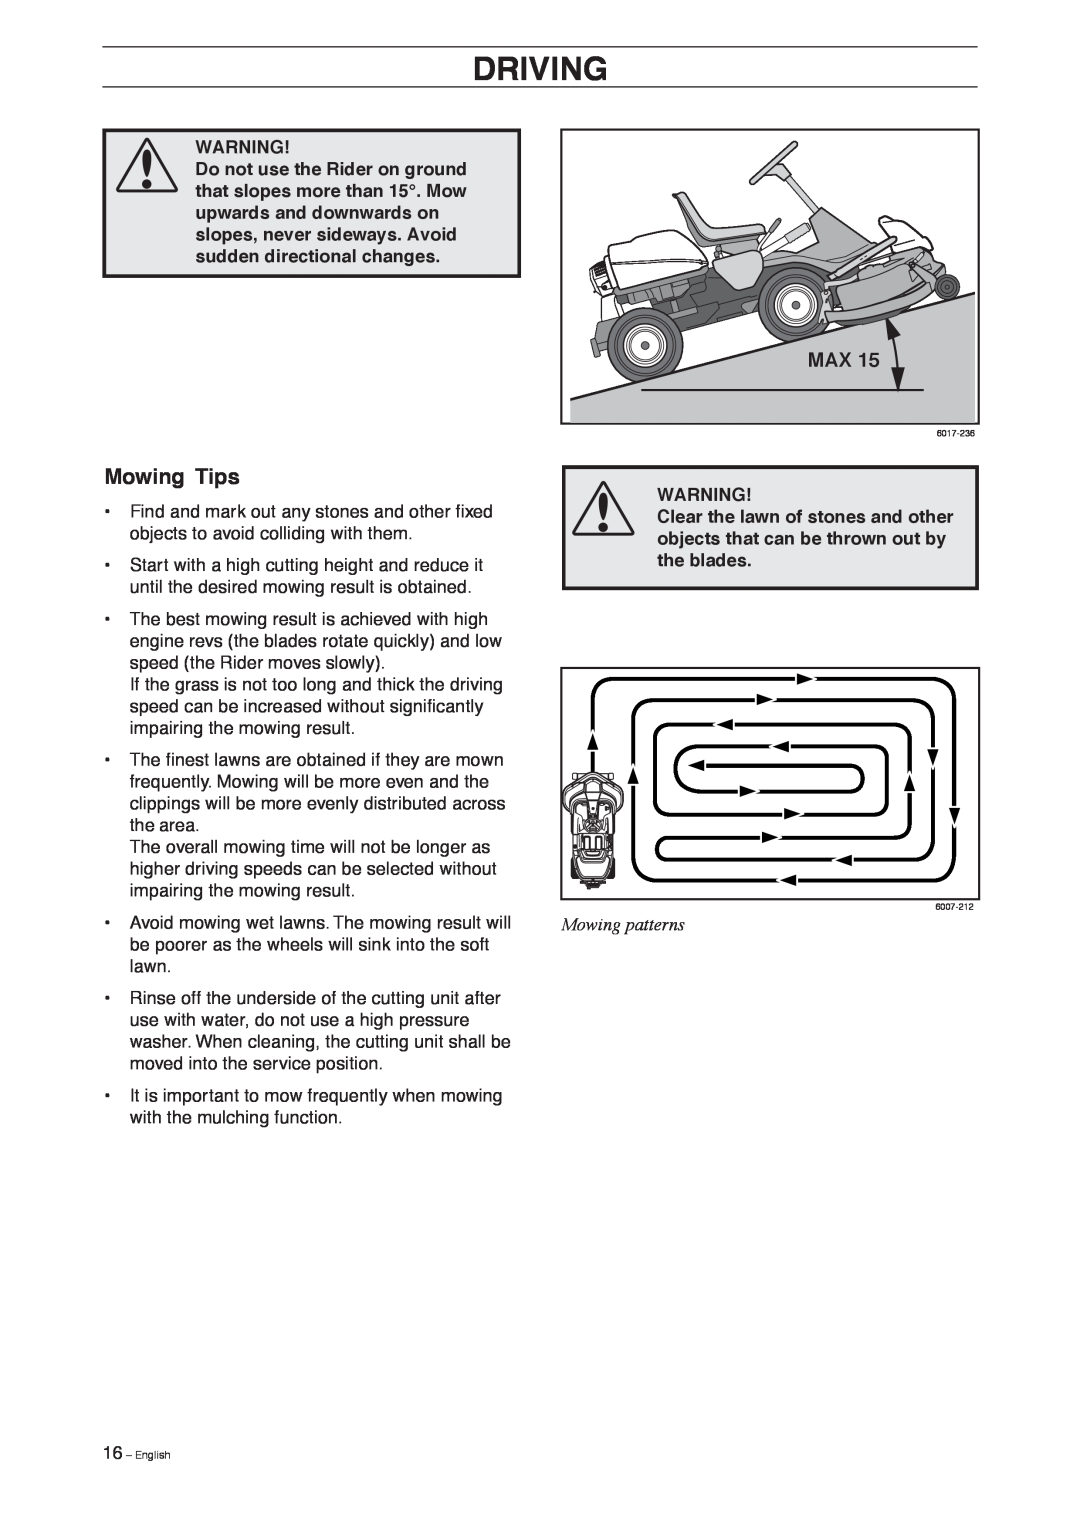 Husqvarna Pro 18 AWD manual Driving, Mowing Tips, Mowing patterns 